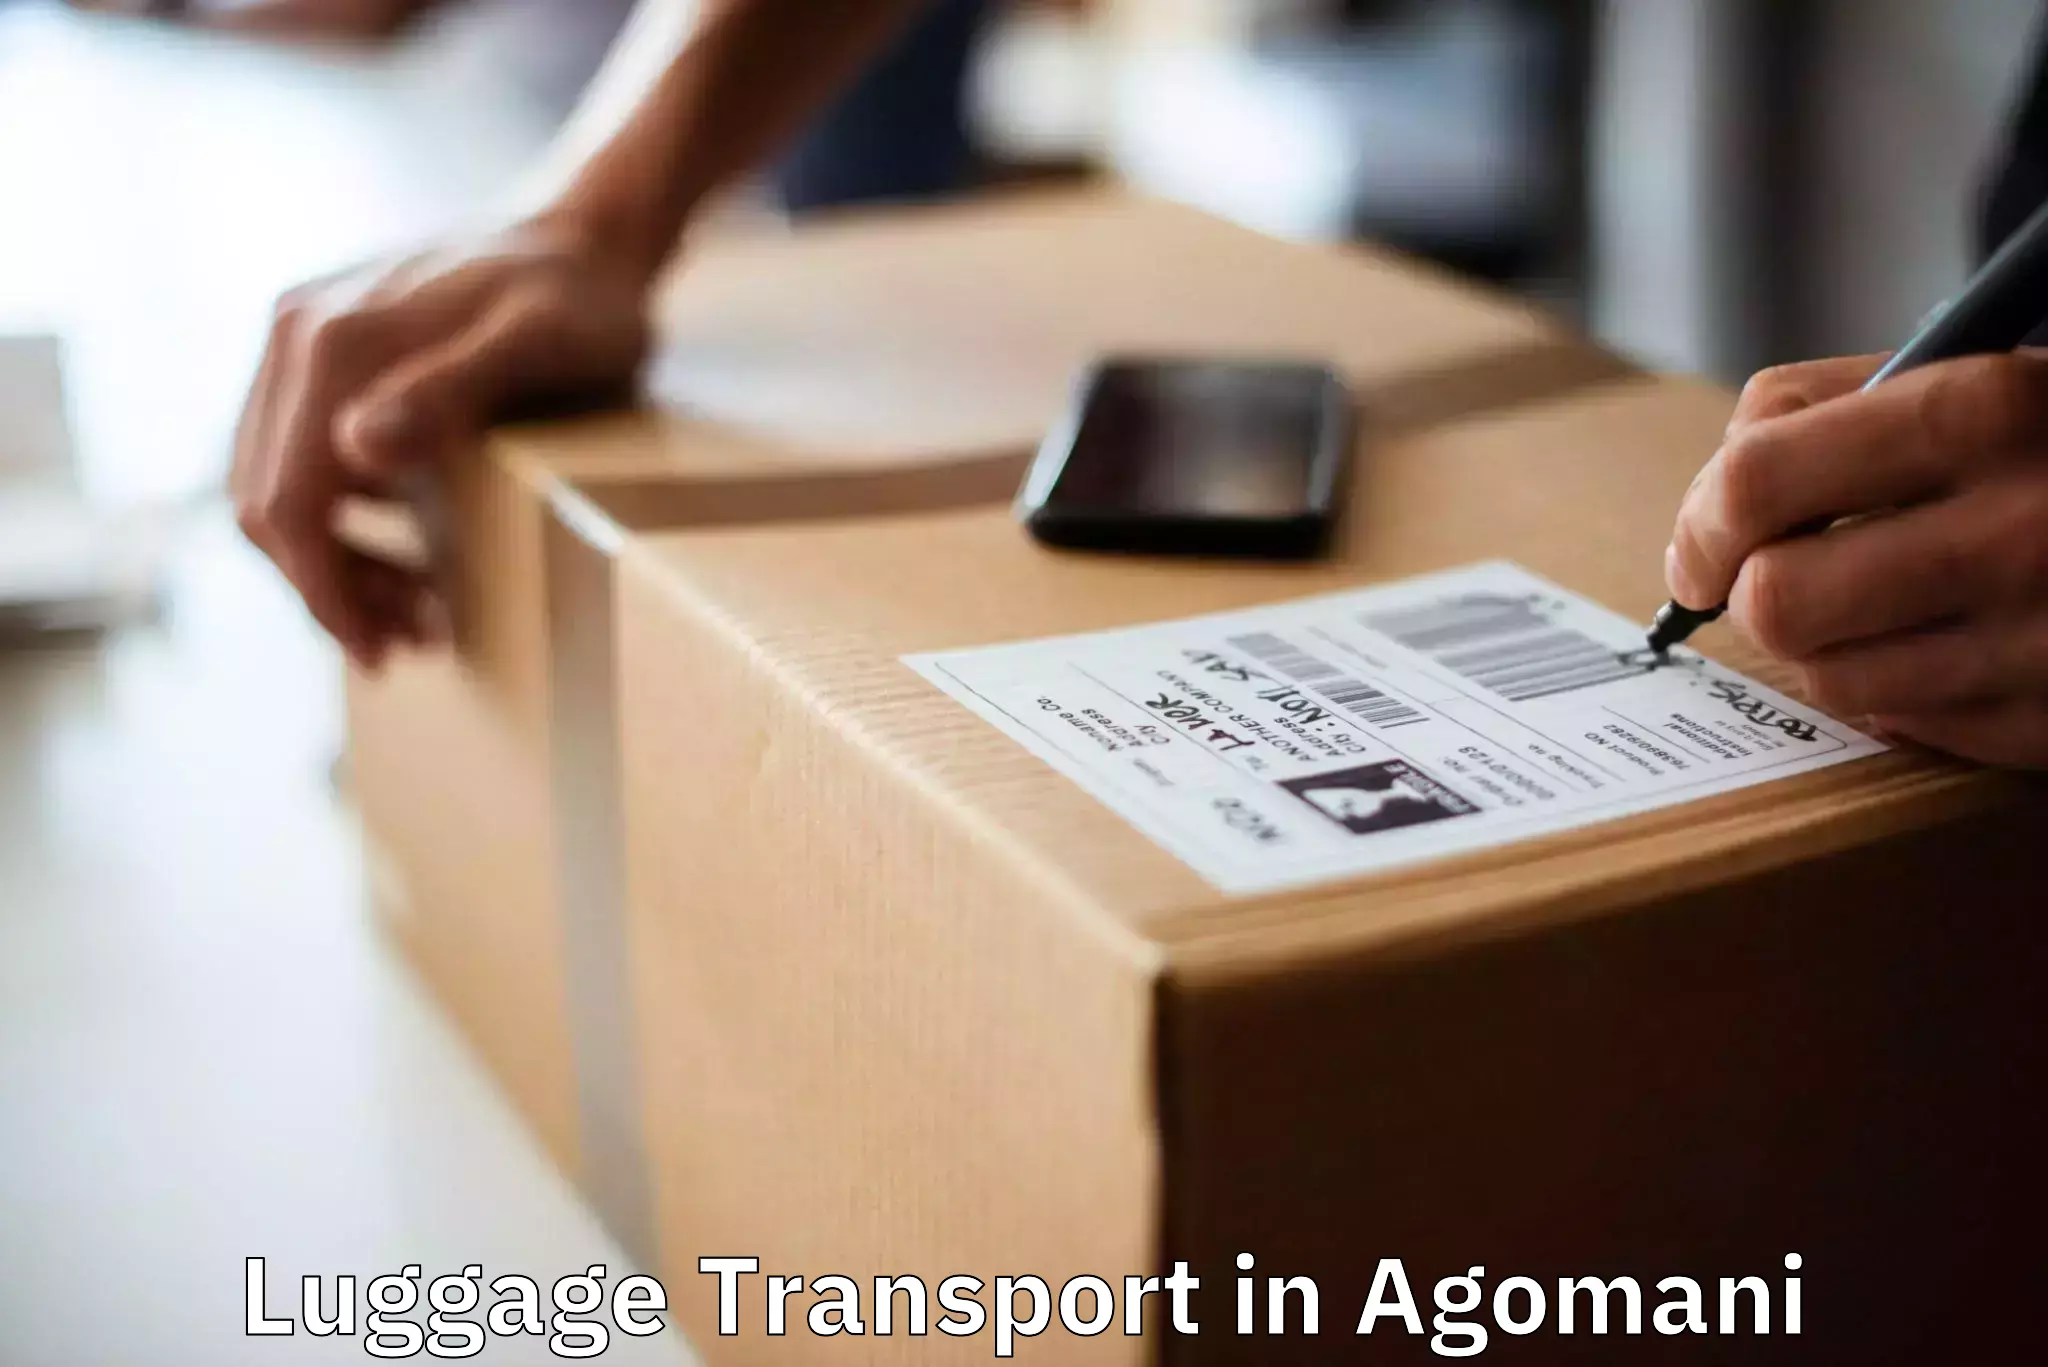 Luggage shipping service in Agomani